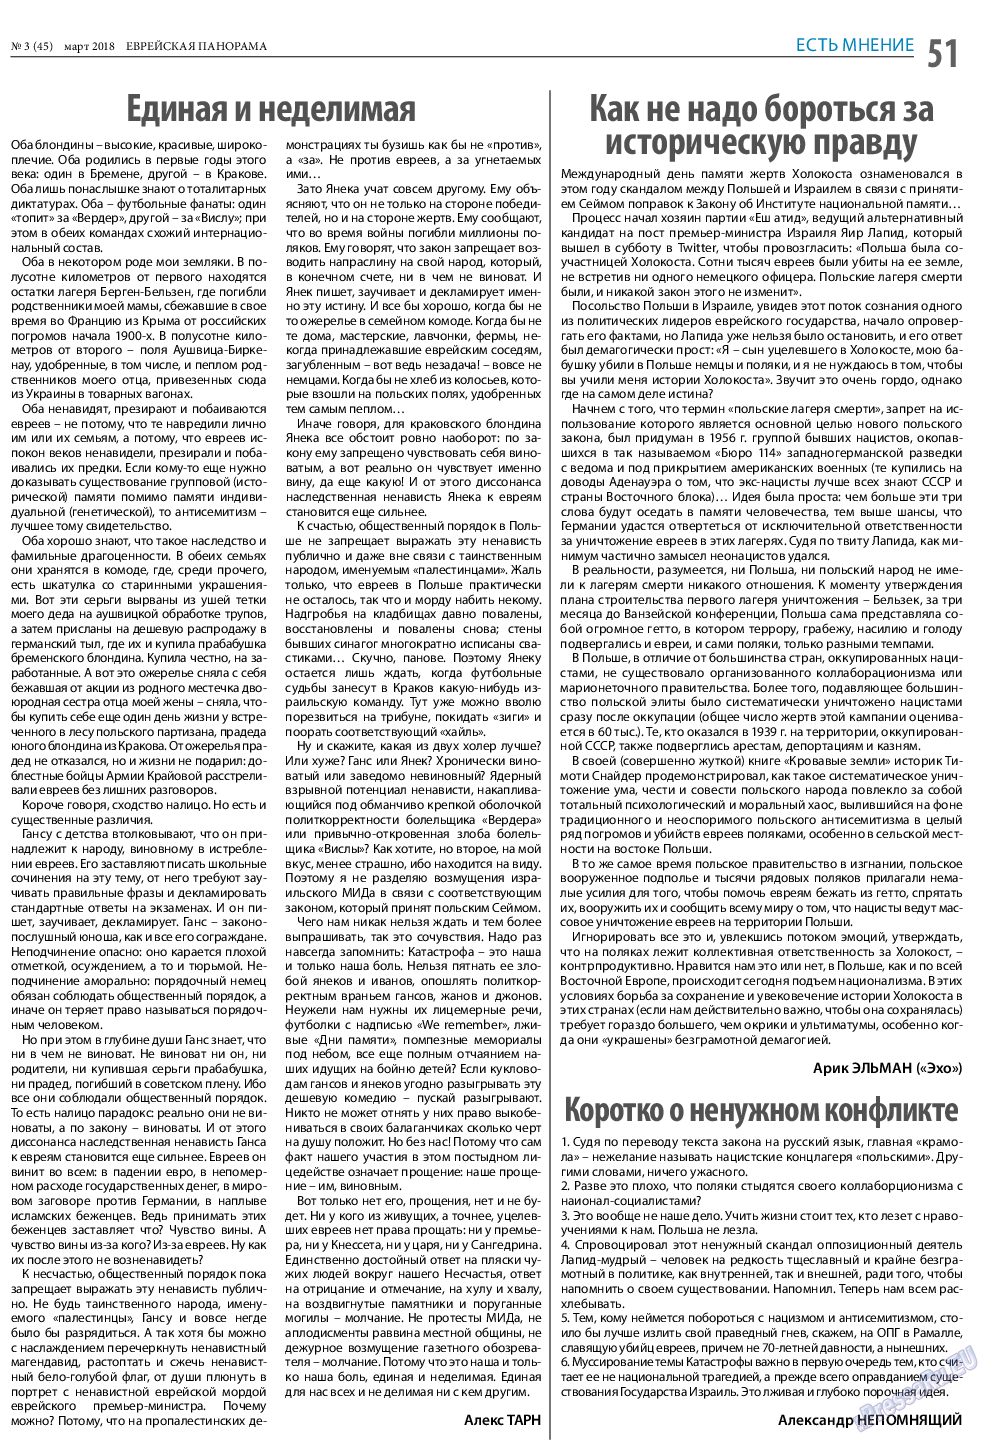 Еврейская панорама, газета. 2018 №3 стр.51